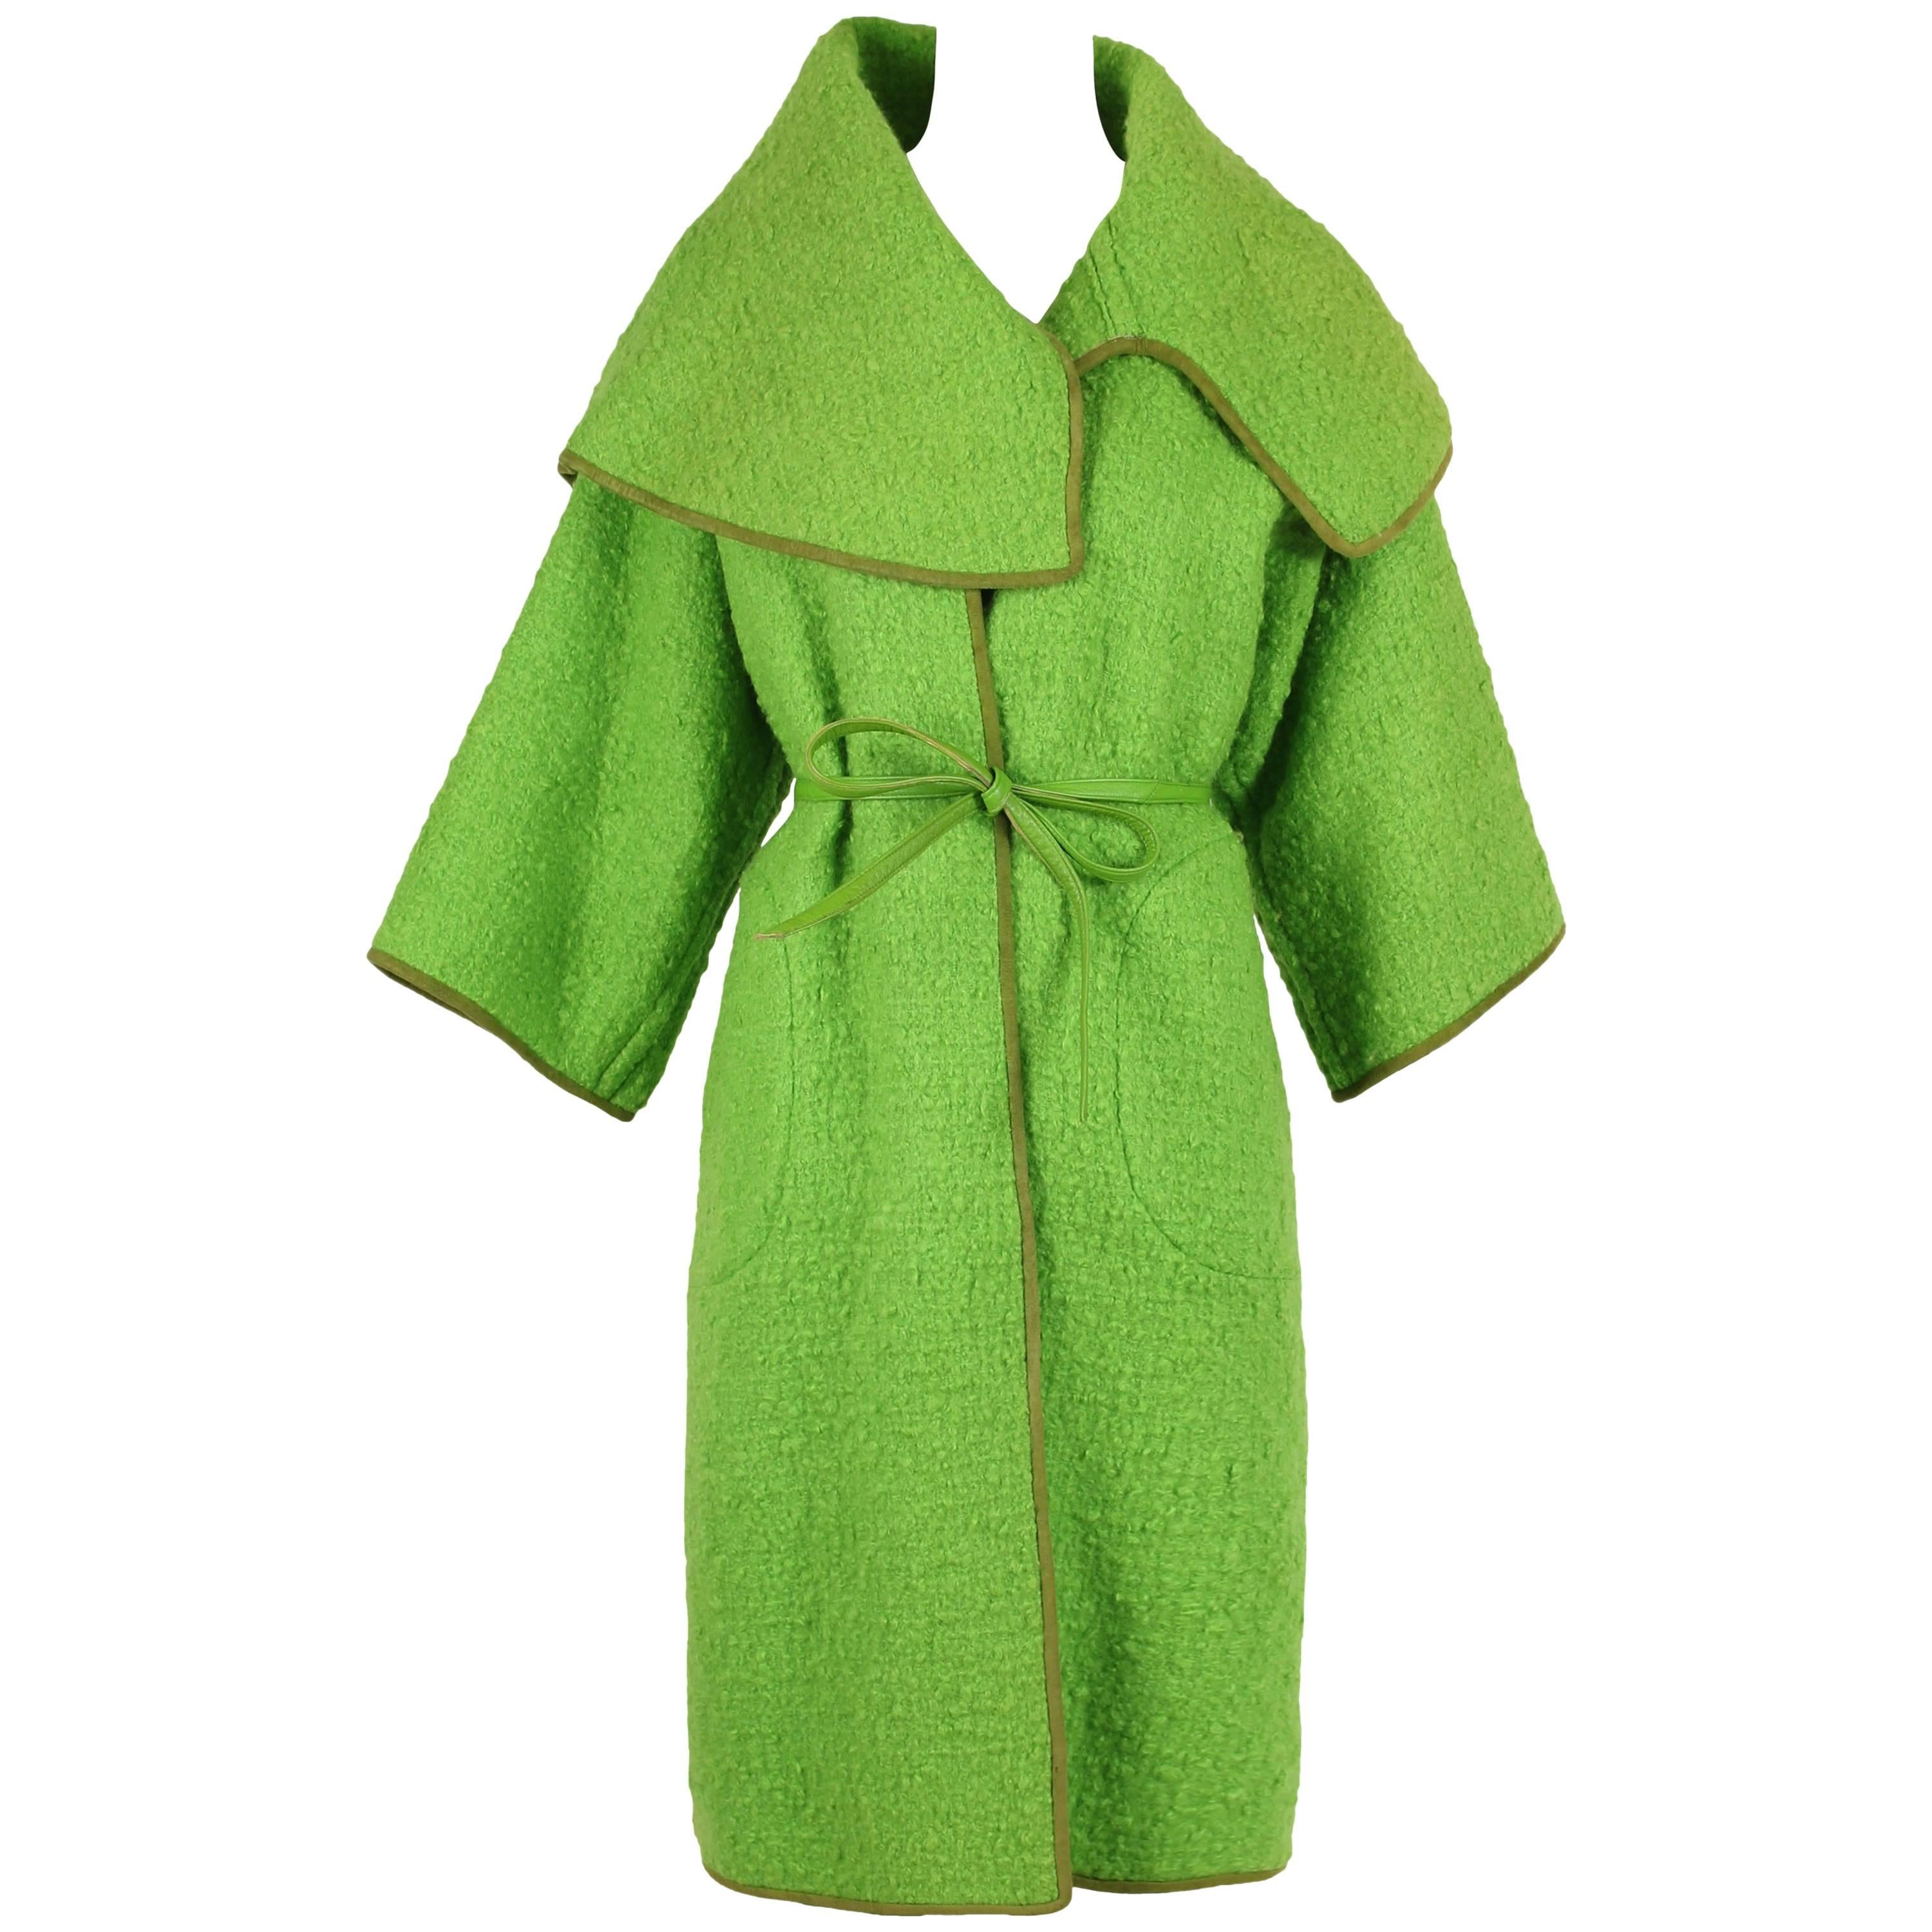 Bonnie Cashin for Sills Lime Green Boucle Wool Coat circa 1960s